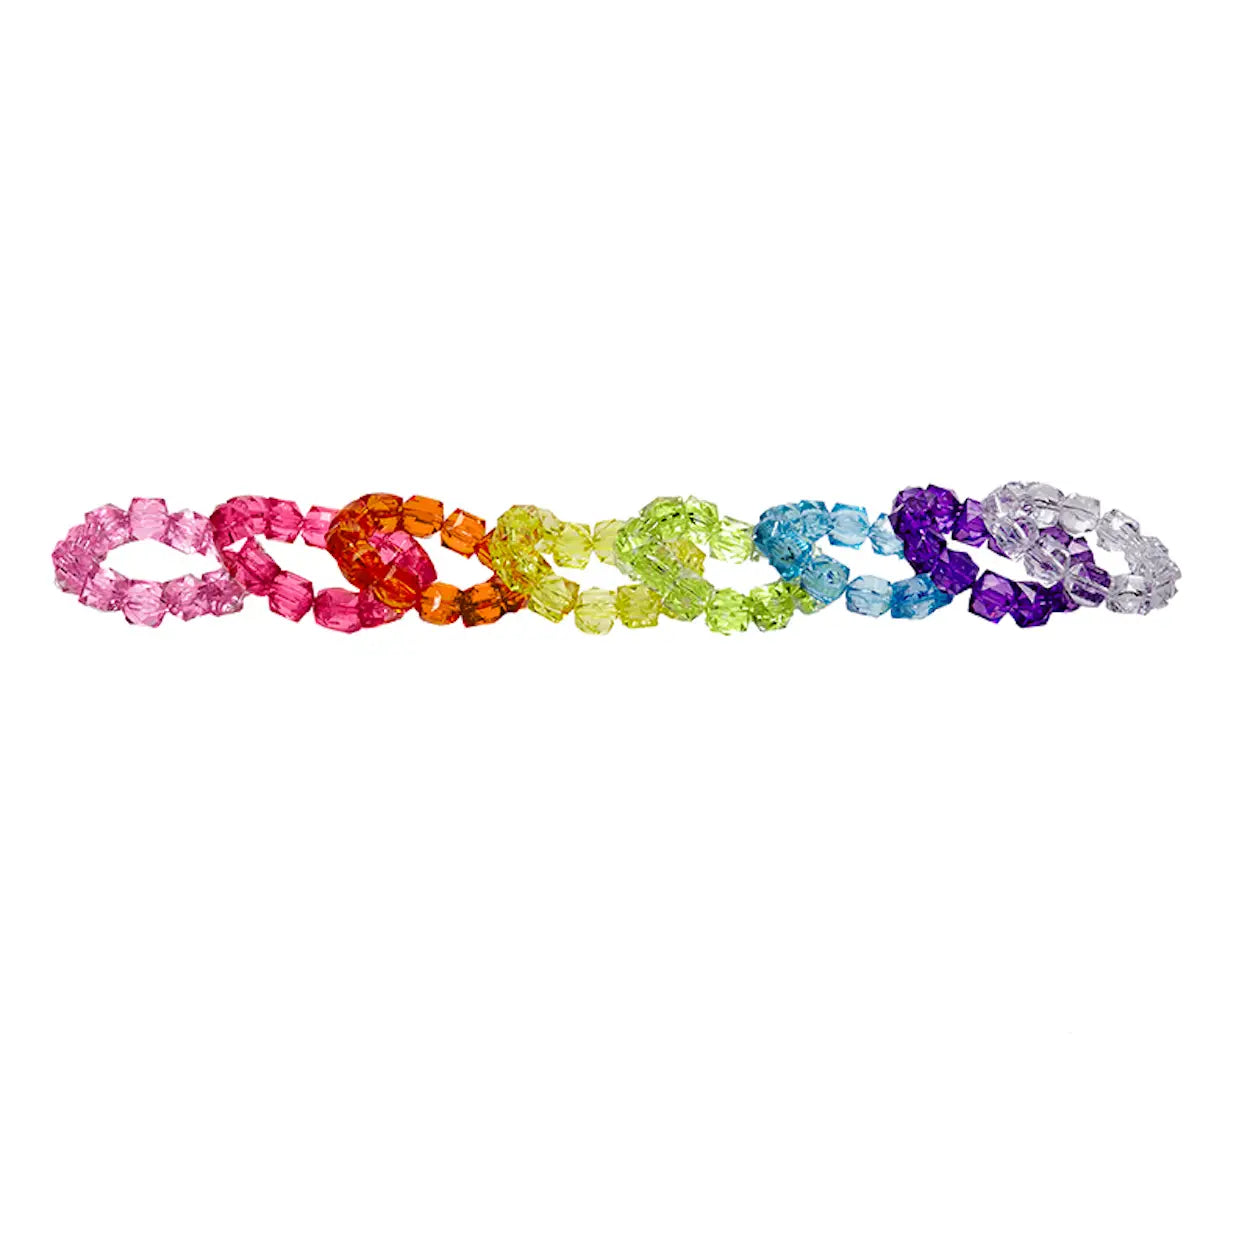 Solid Rock Candy Bracelet | Assorted Colors